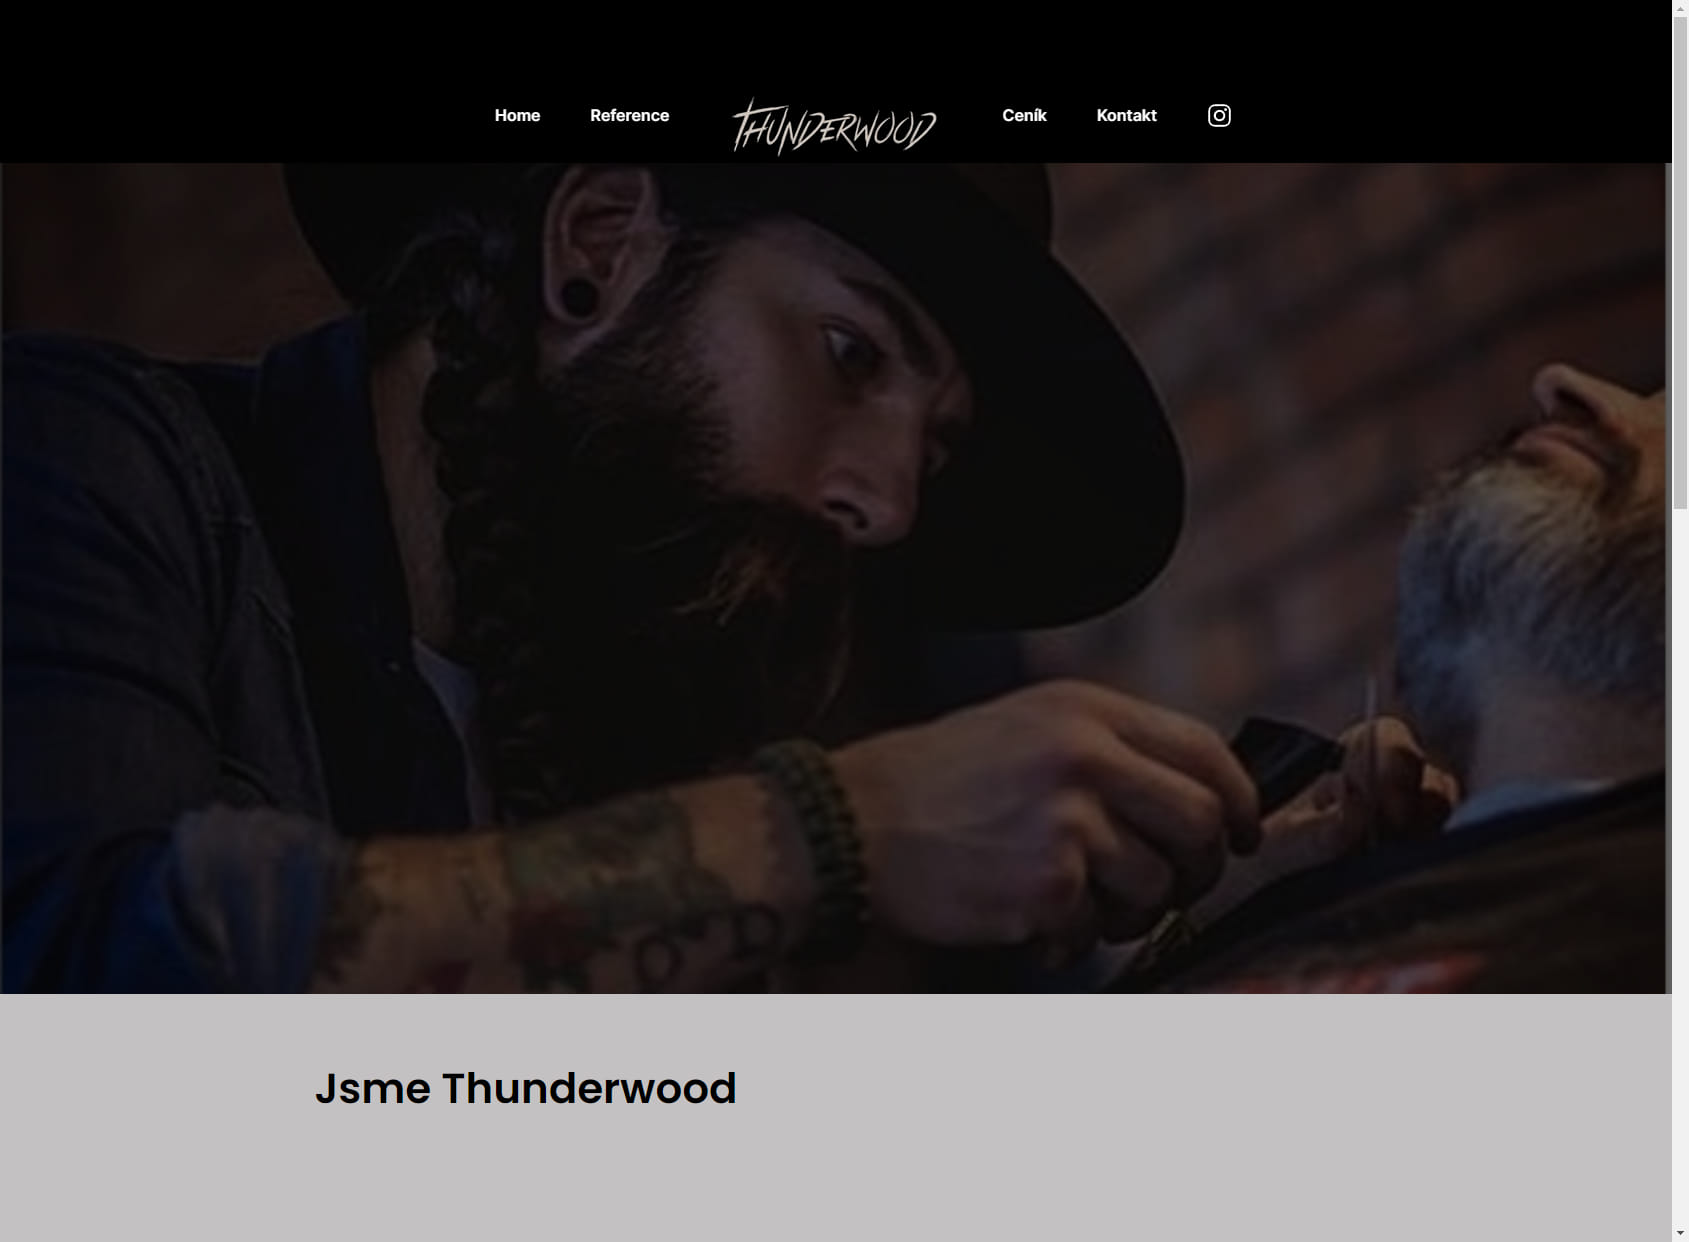 Thunderwood tattoo & barber